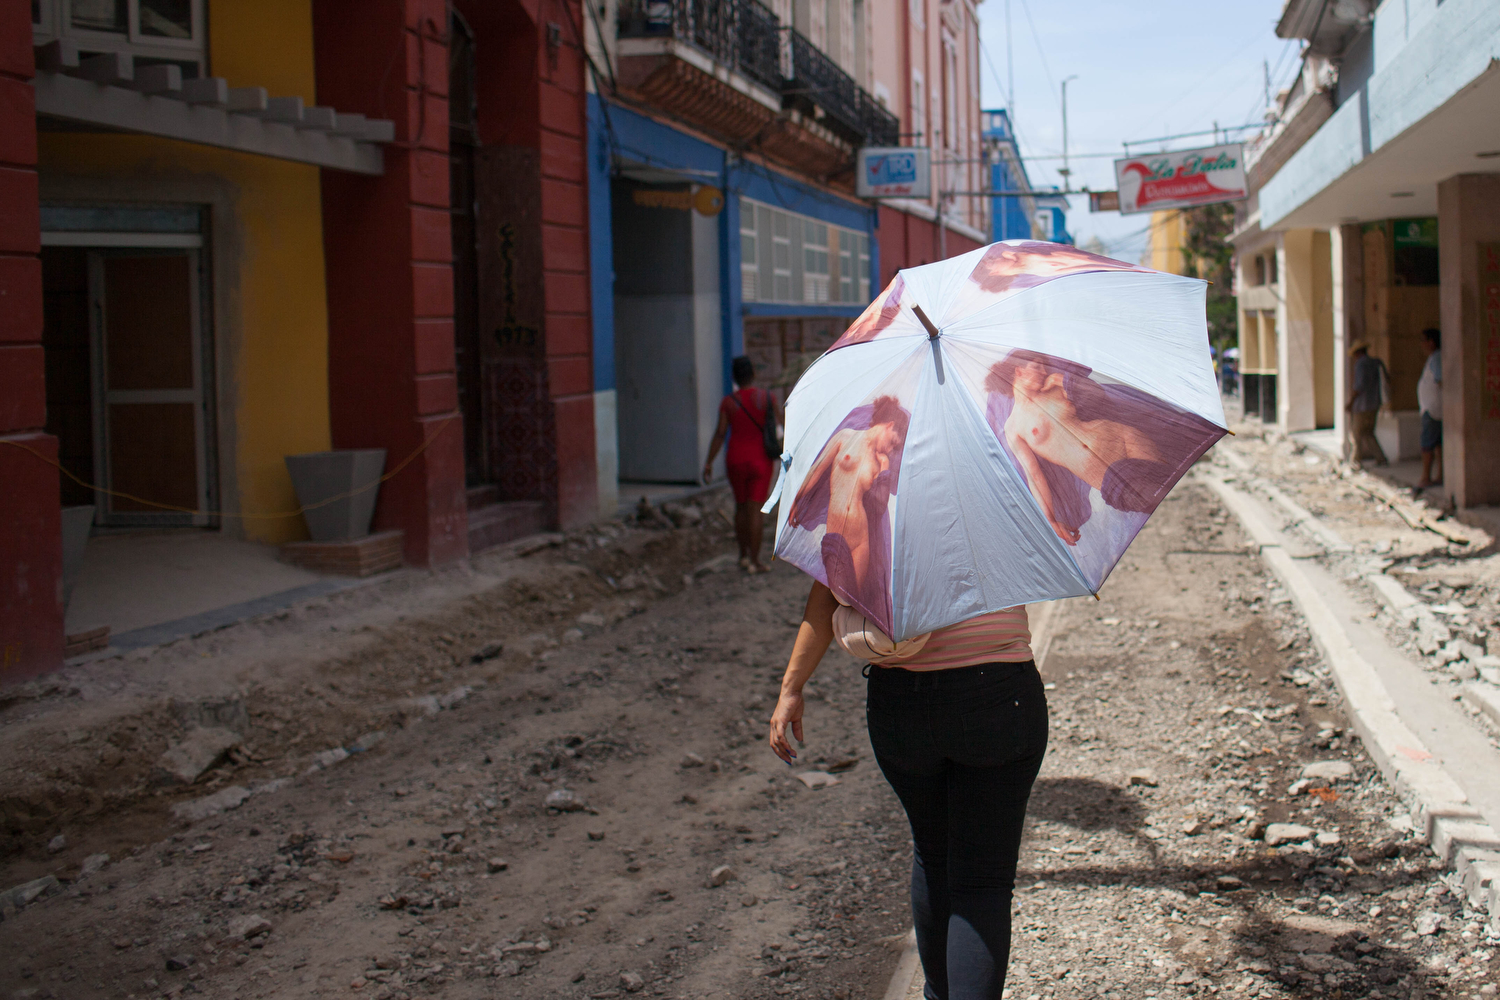  A woman walks down a crumbled street under construction for a walking path in Santiago de Cuba, Cuba. 